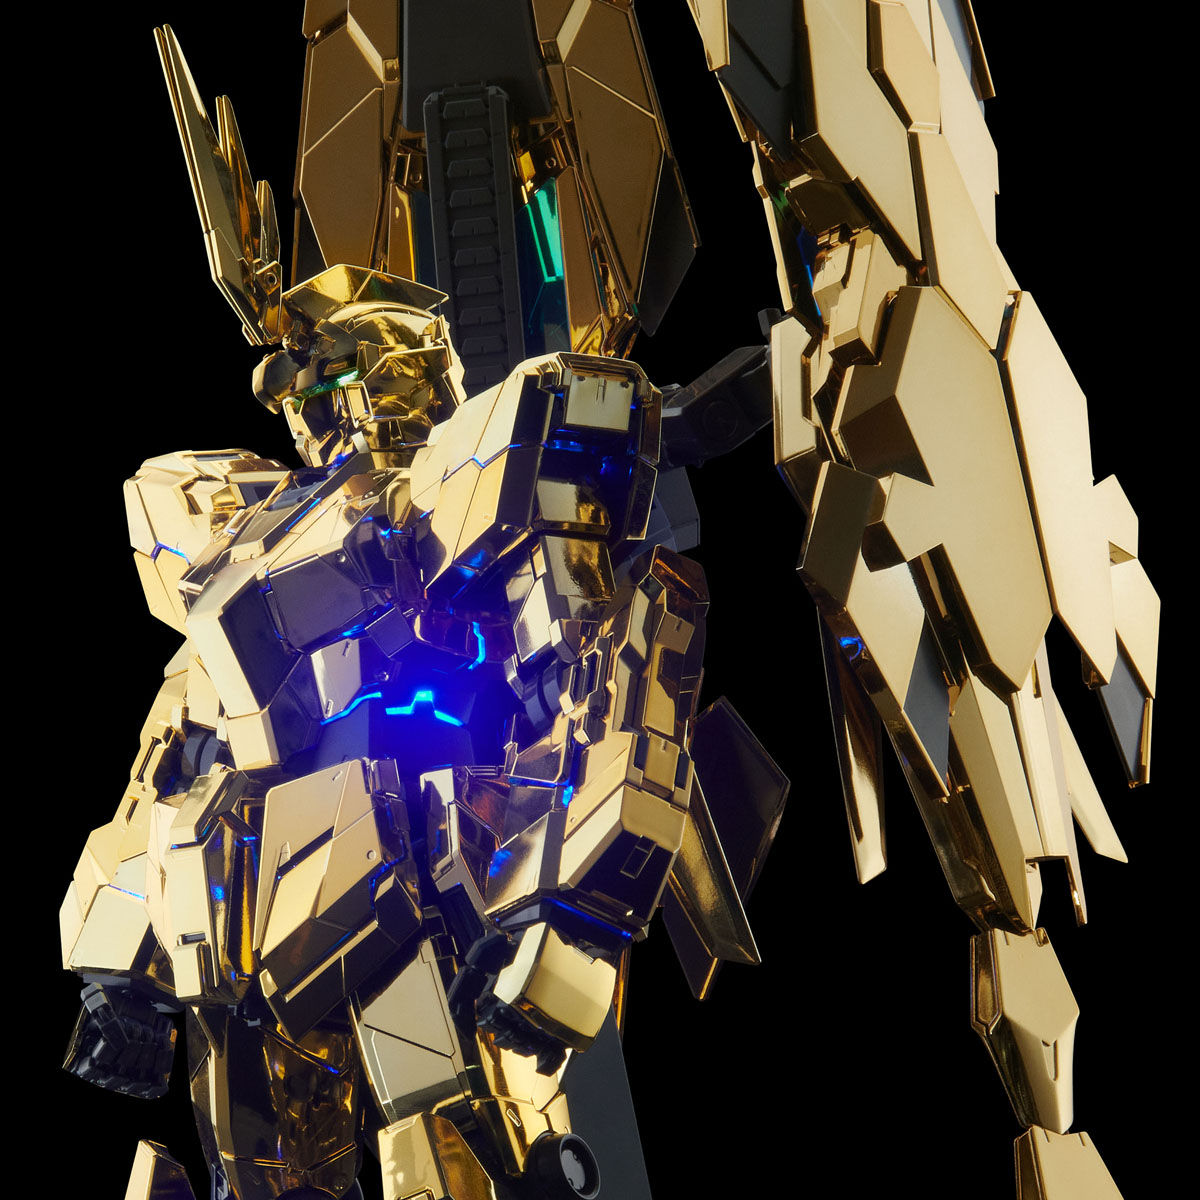 PG Narrative Expansion Parts for RX-0 Unicorn Gundam 03 Phenex